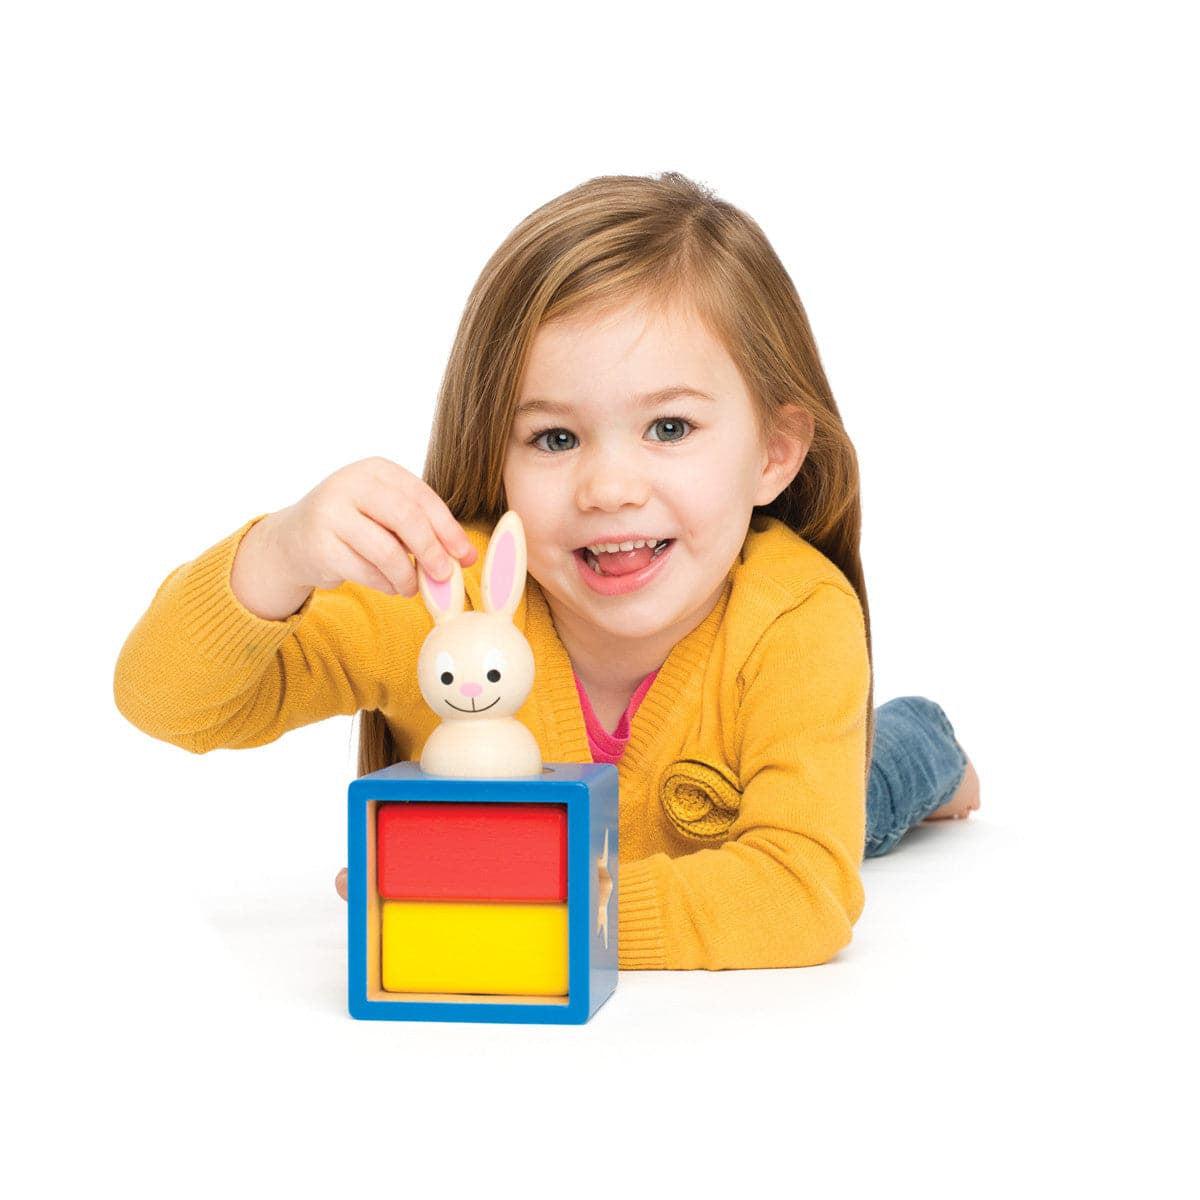 Smart Toys & Games-Bunny Peek-a-Boo-SG037US-Legacy Toys